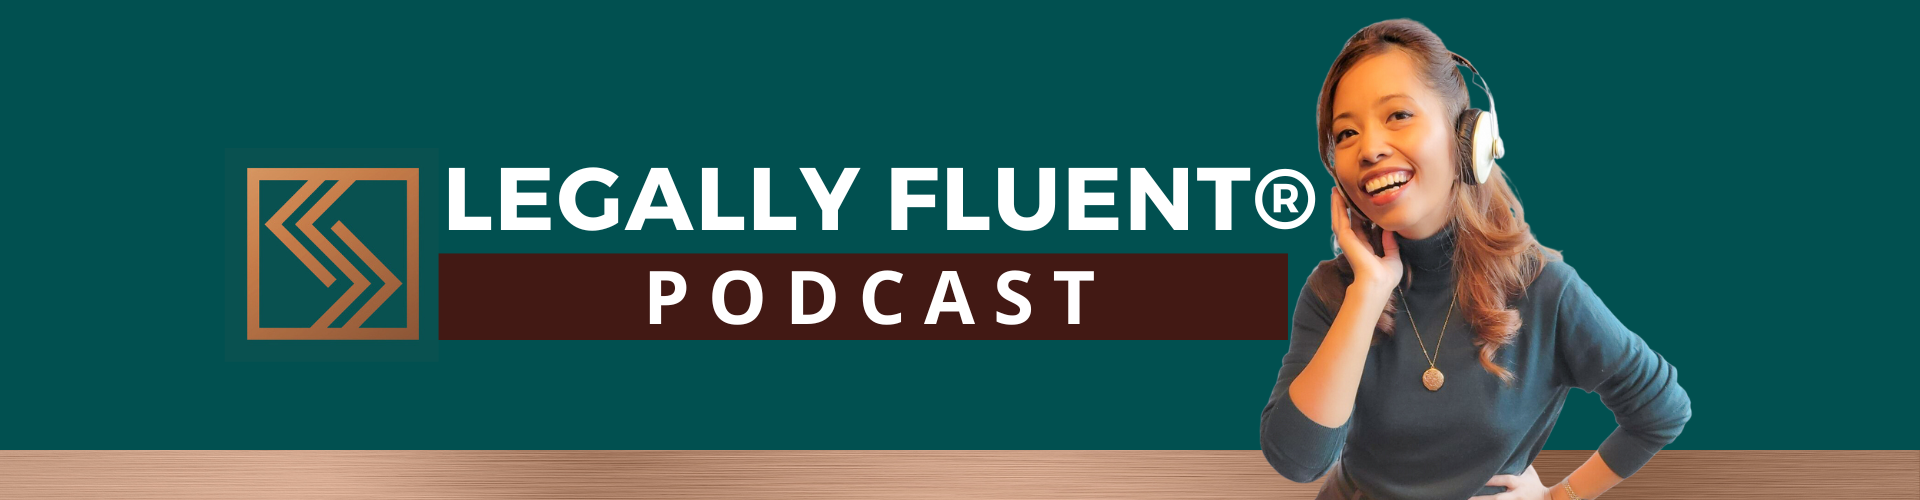 Legally Fluent® Podcast | Online Business Decoded with Vena Verga-Danemar